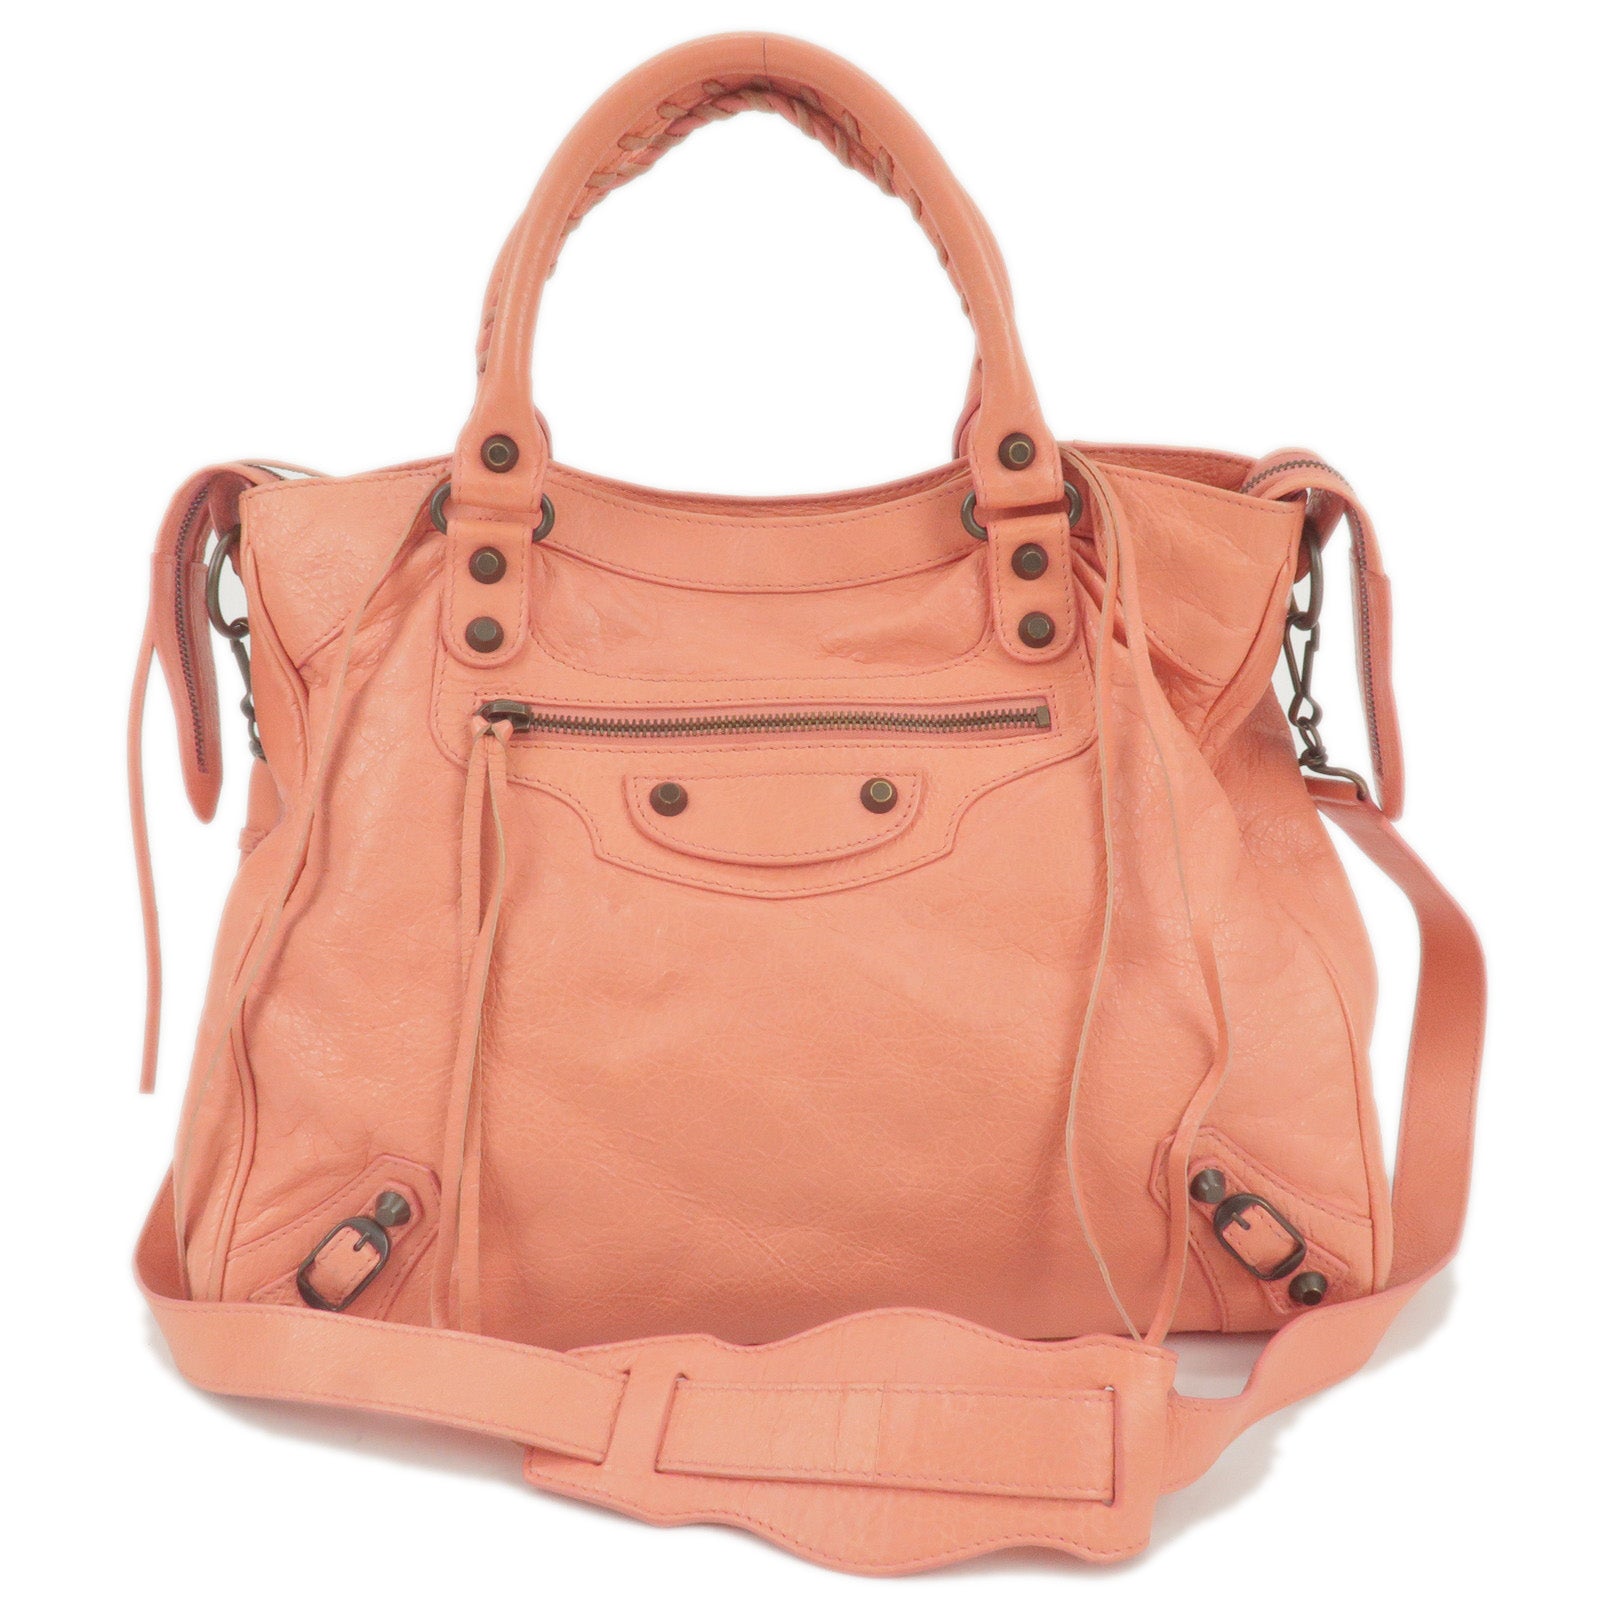 velo - 235216 – black College large leather bag - The - Pink - BALENCIAGA - - 2Way - Hand - Bag - Сумка alexander wang small ryan ribbed-knit tote bag pink - Leather